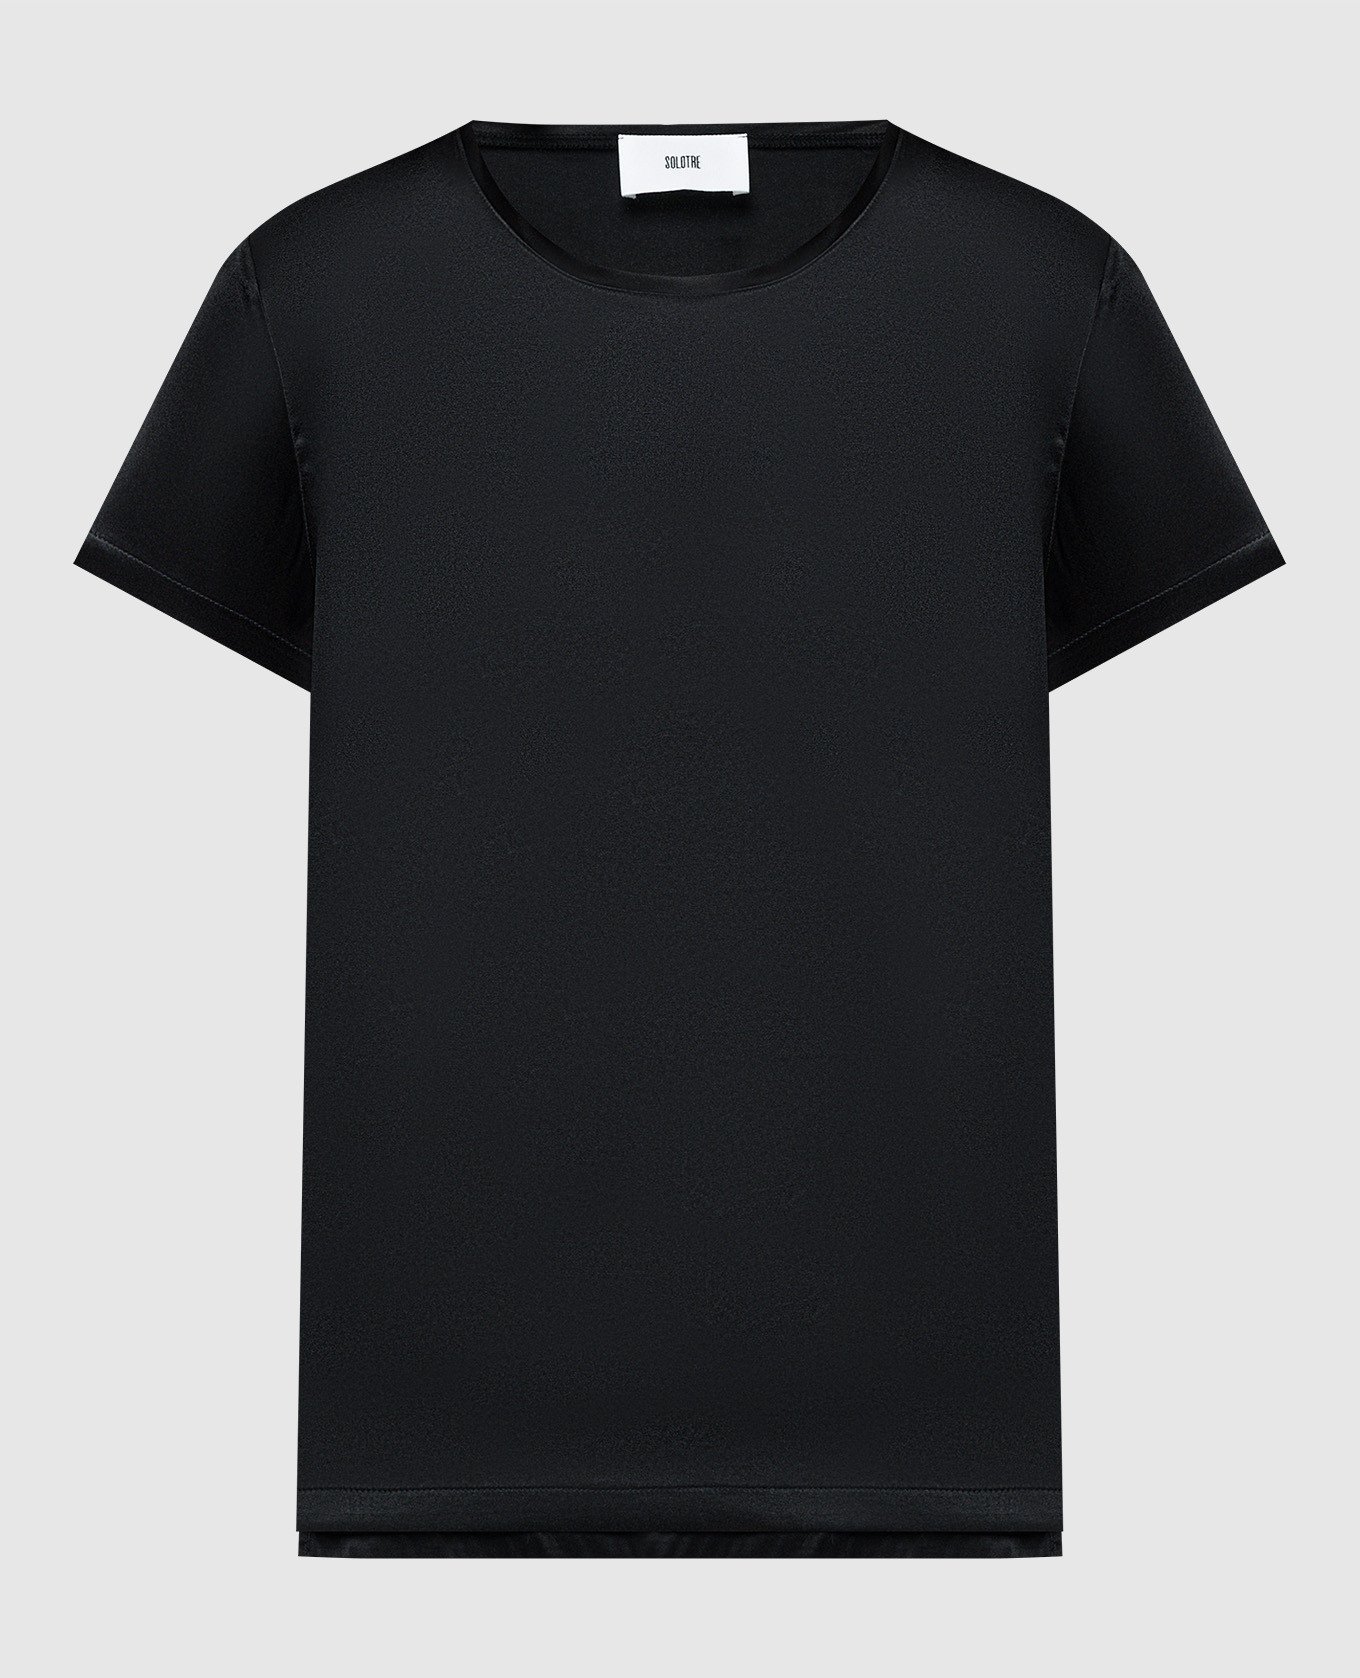 Black T-shirt made of silk